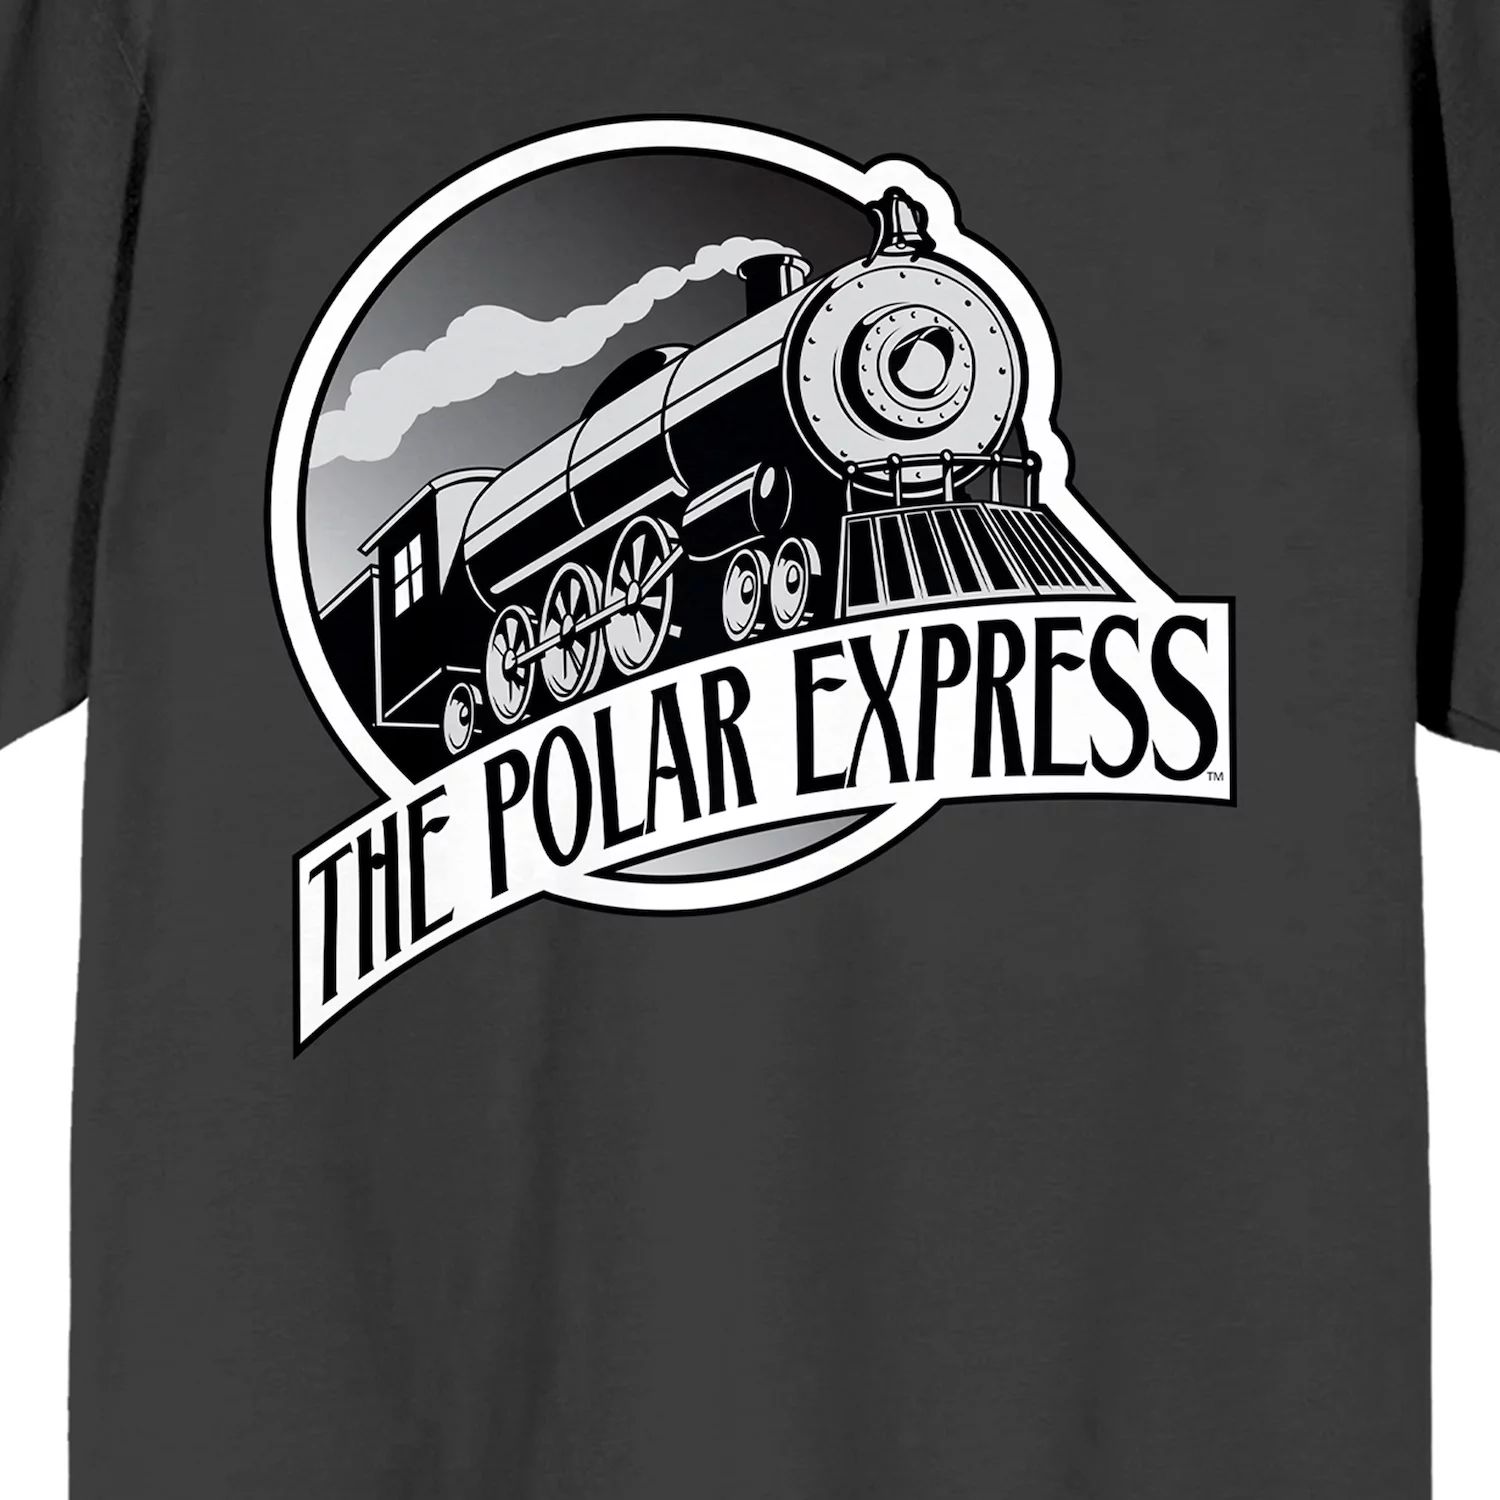 мужская футболка polar express all aboard the polar express licensed character Мужская футболка с логотипом Polar Express Train Licensed Character